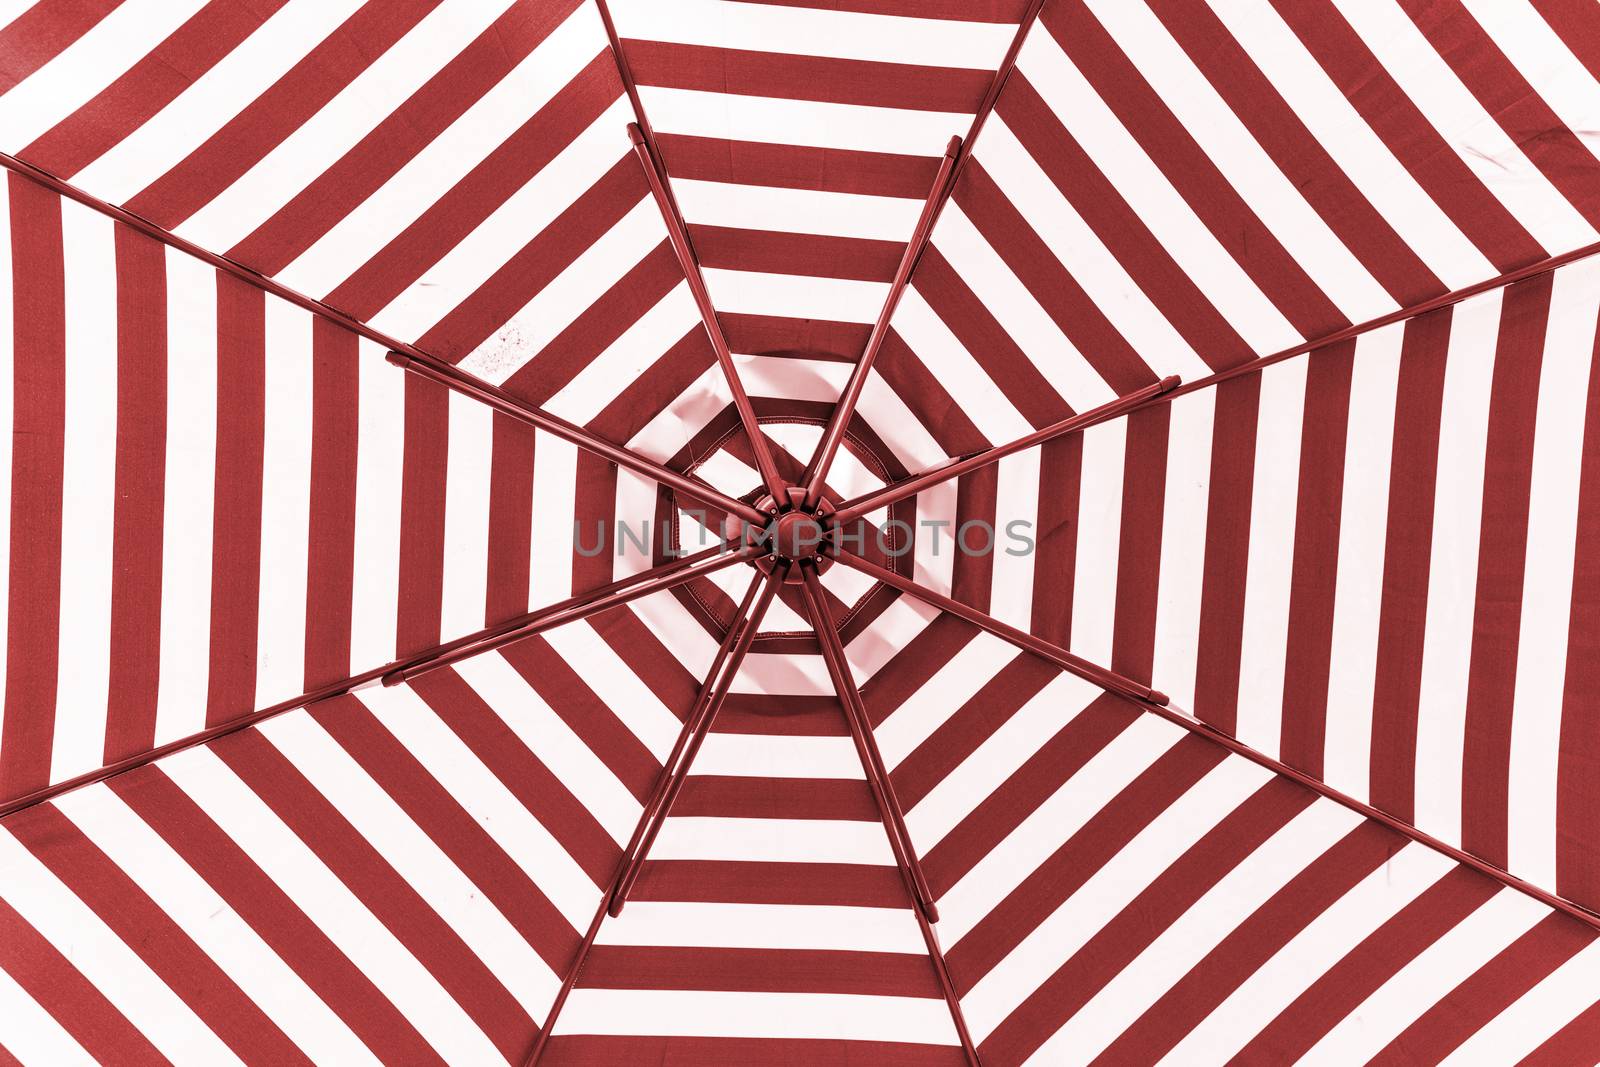 Red and white umbrella beach